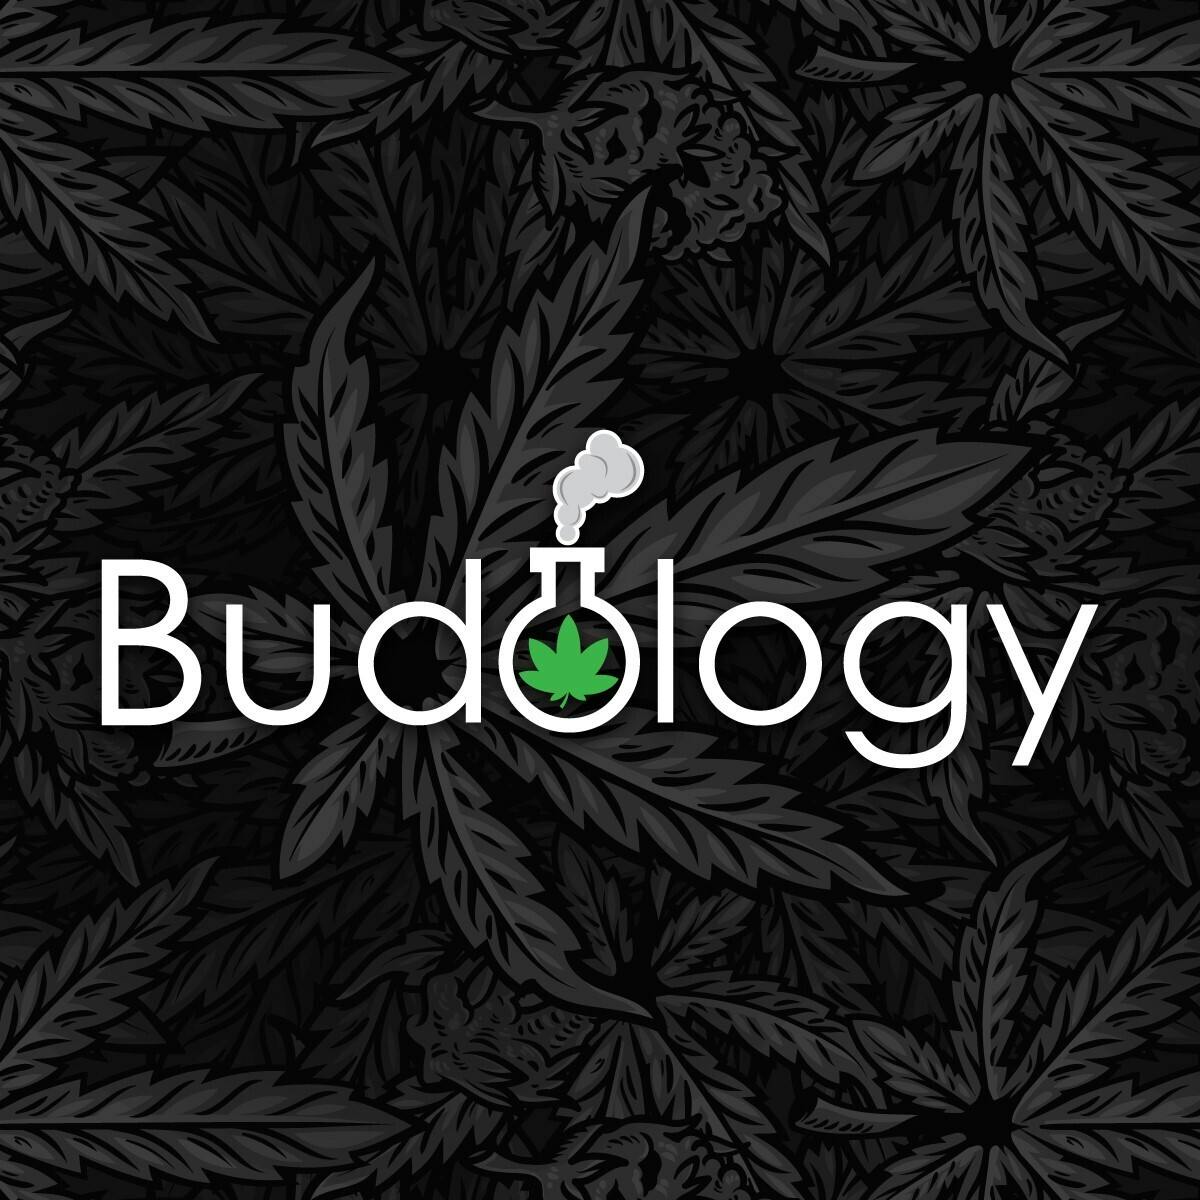 Budology logo